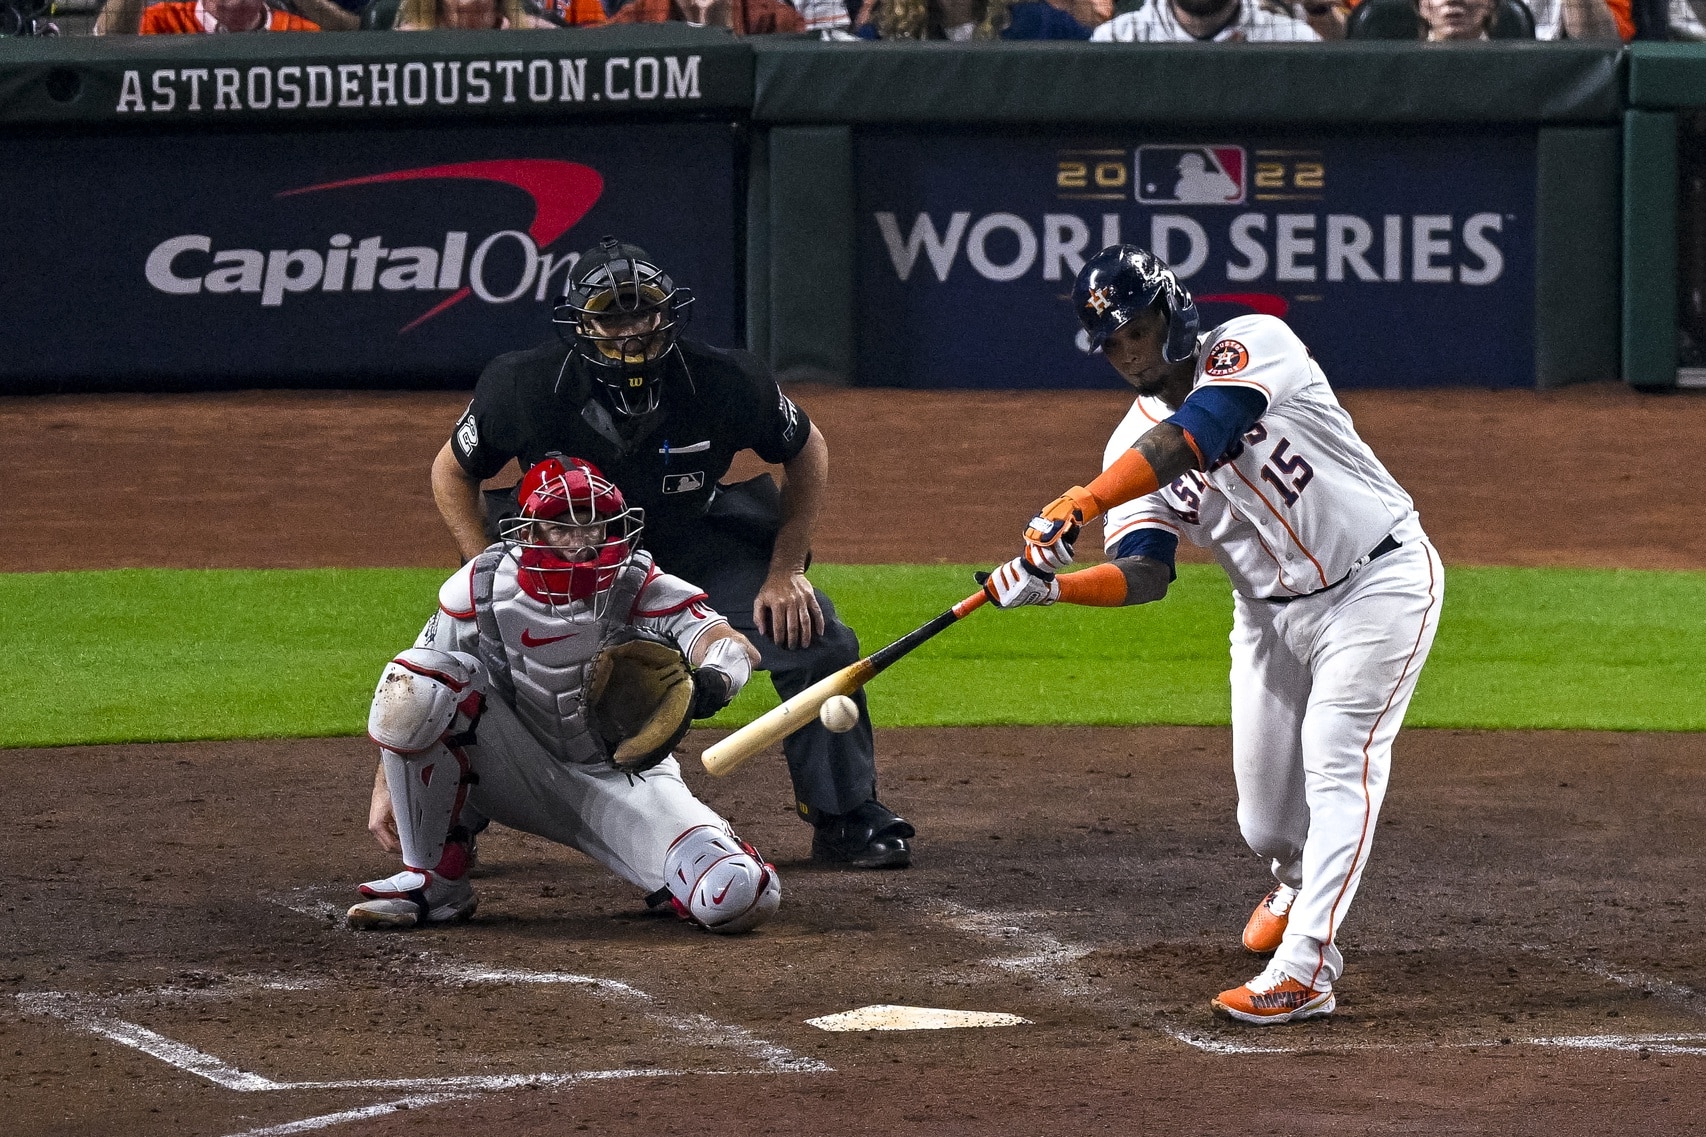 MLB Explanation RE: Martin Maldonado’s Illegal Bat and “Player Safety” Makes Little Sense